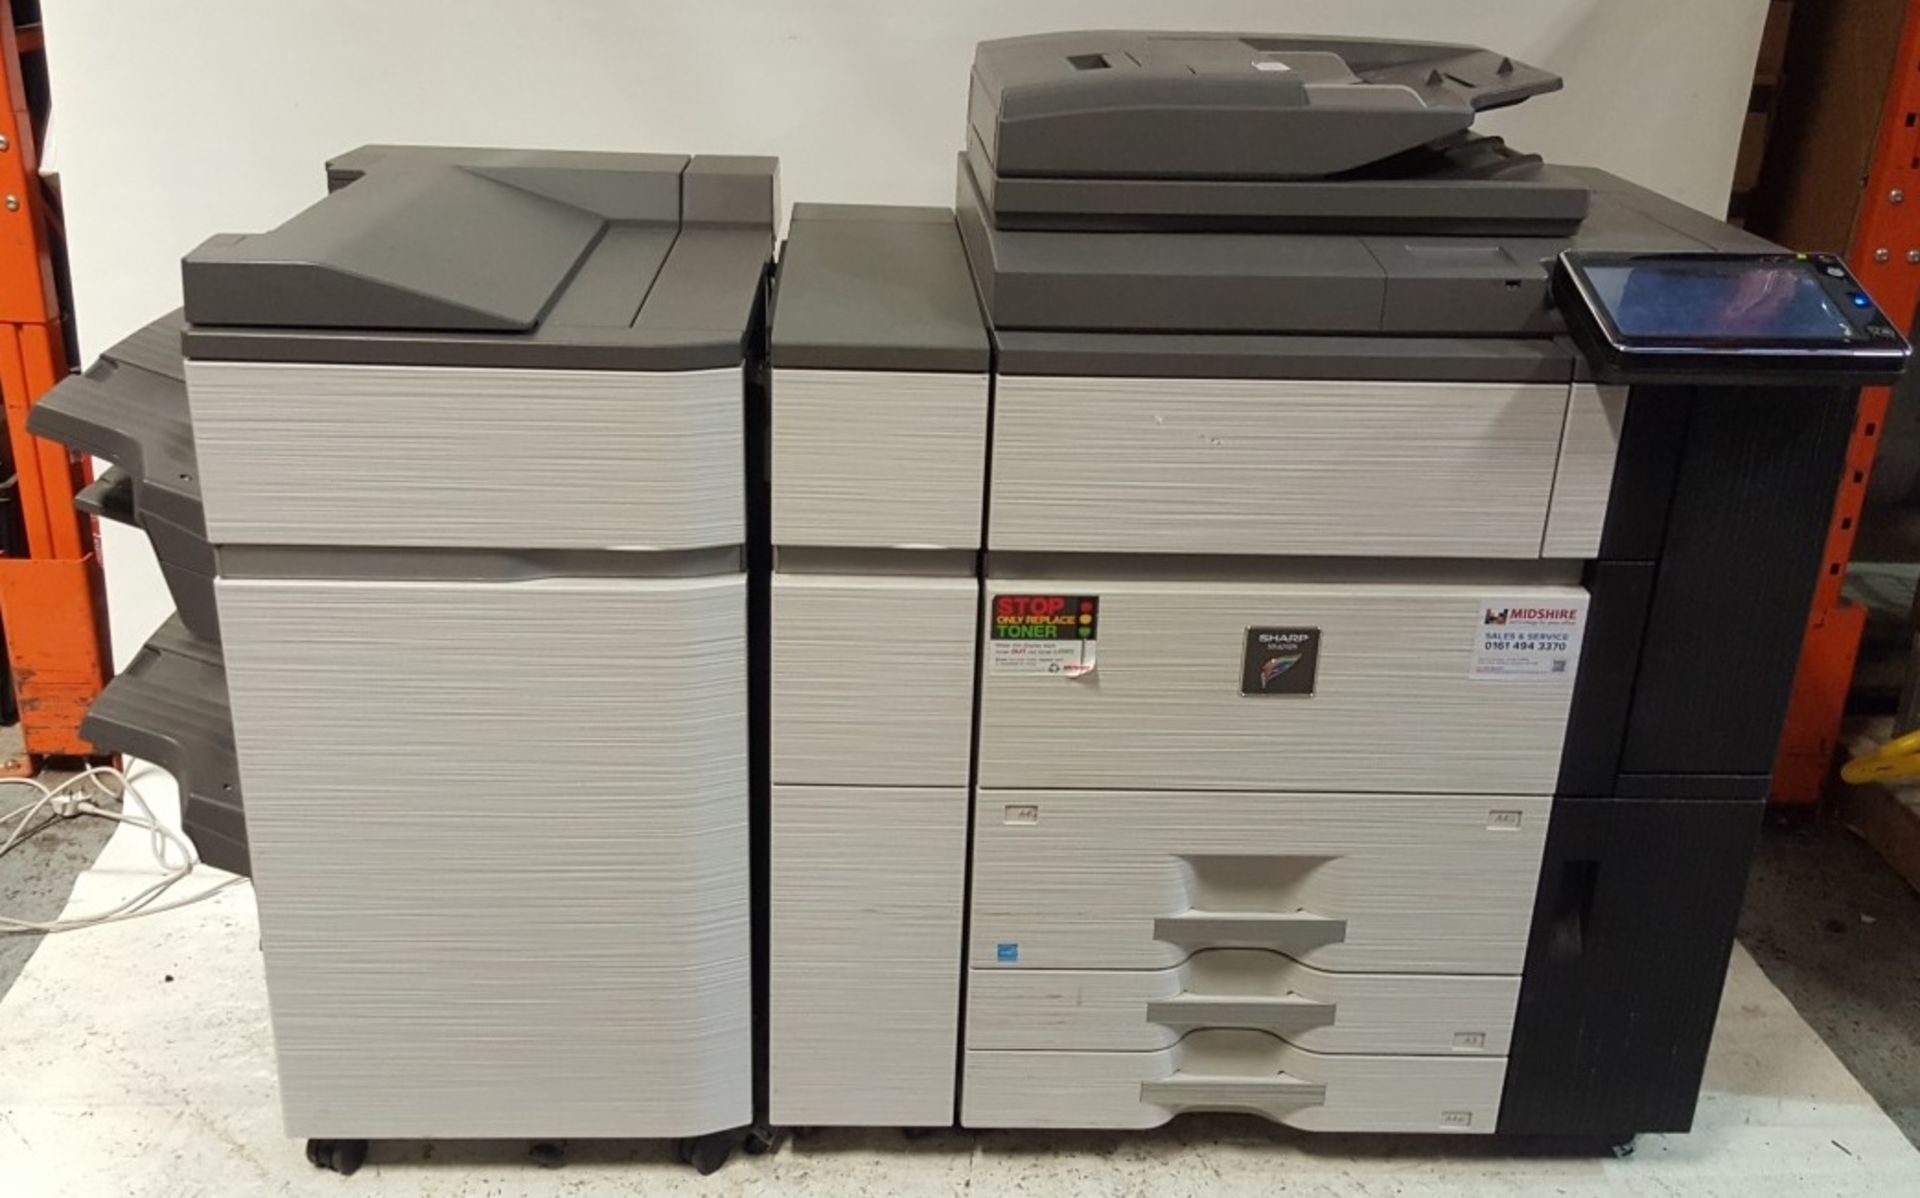 1 x Sharp MX6240N Office Printer + Saddle Stitch Finisher & Curl Correction Unit - CL452 -REF:Ref706